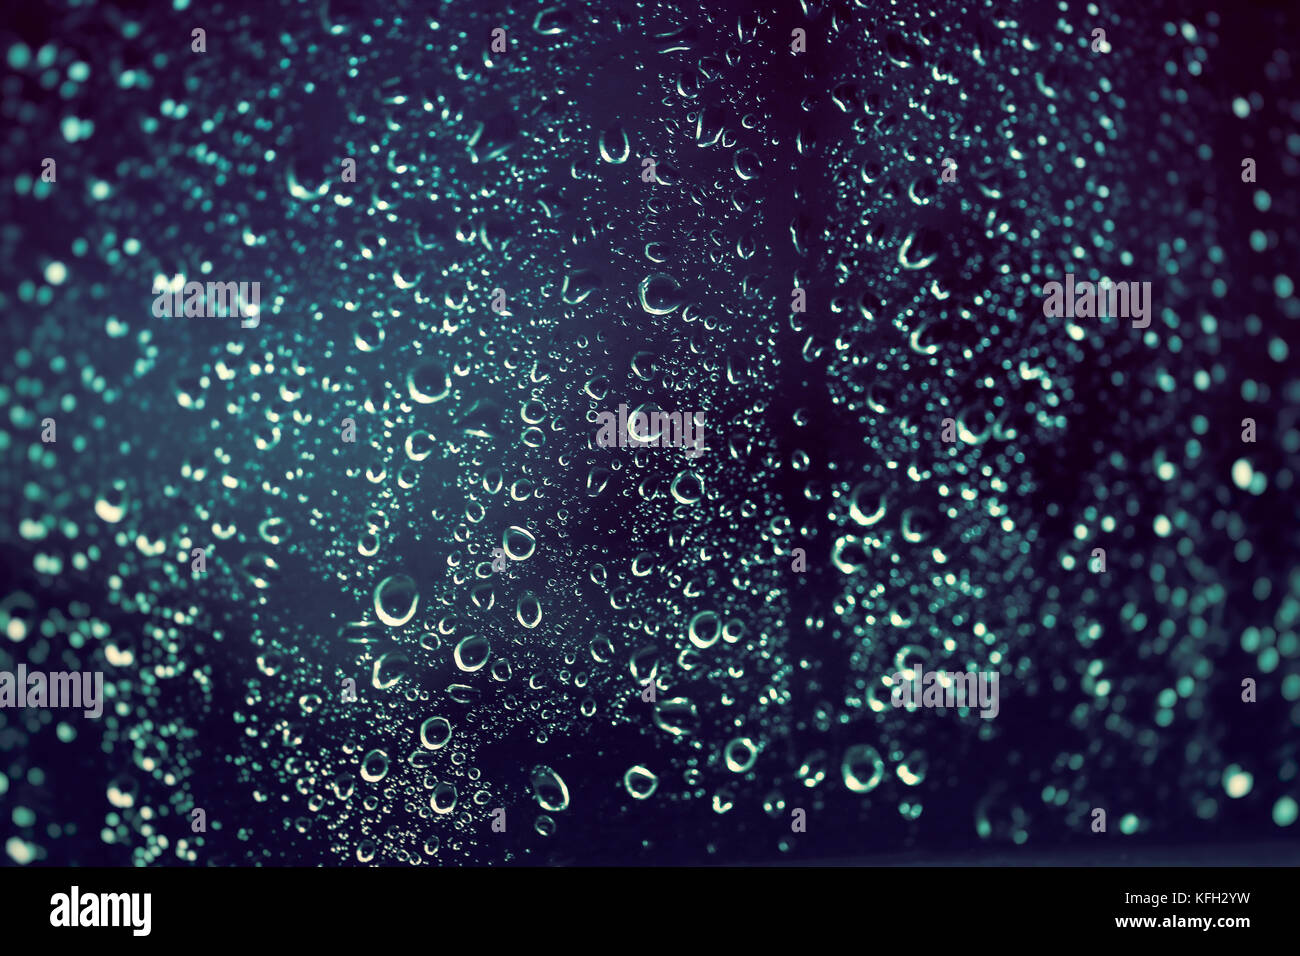 Rainy background, rain drops on the window at night, autumn season backdrop, abstract textured wallpaper Stock Photo